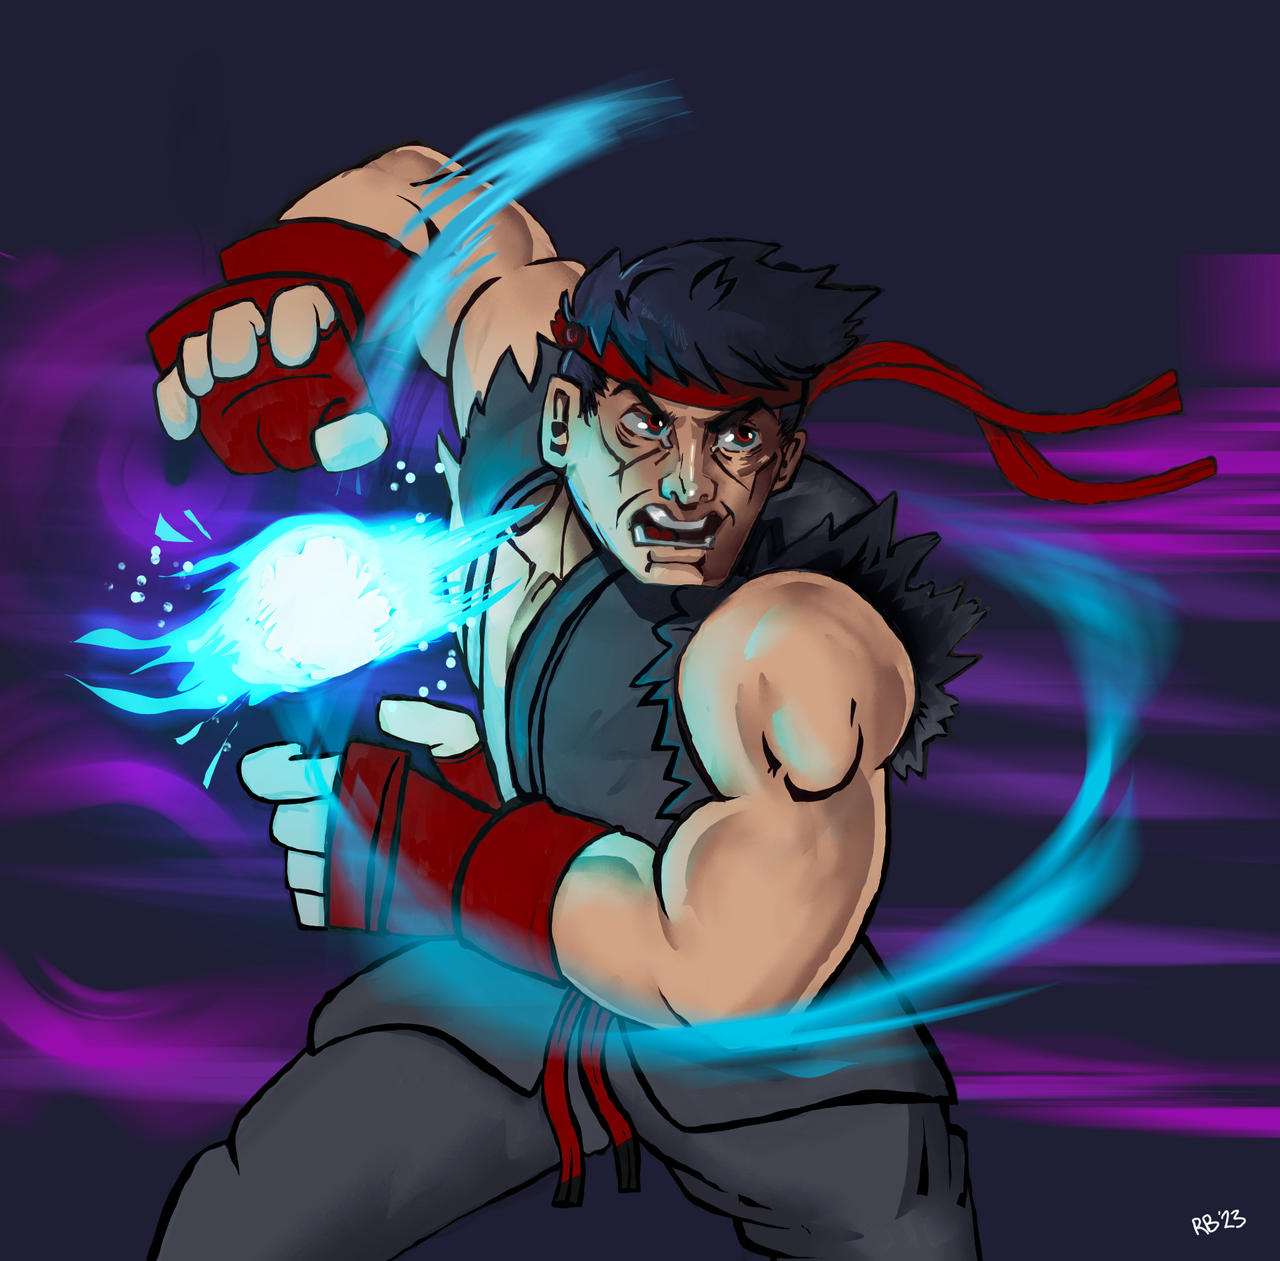 Evil Ryu (Street Fighter IV) by acecore2k on DeviantArt